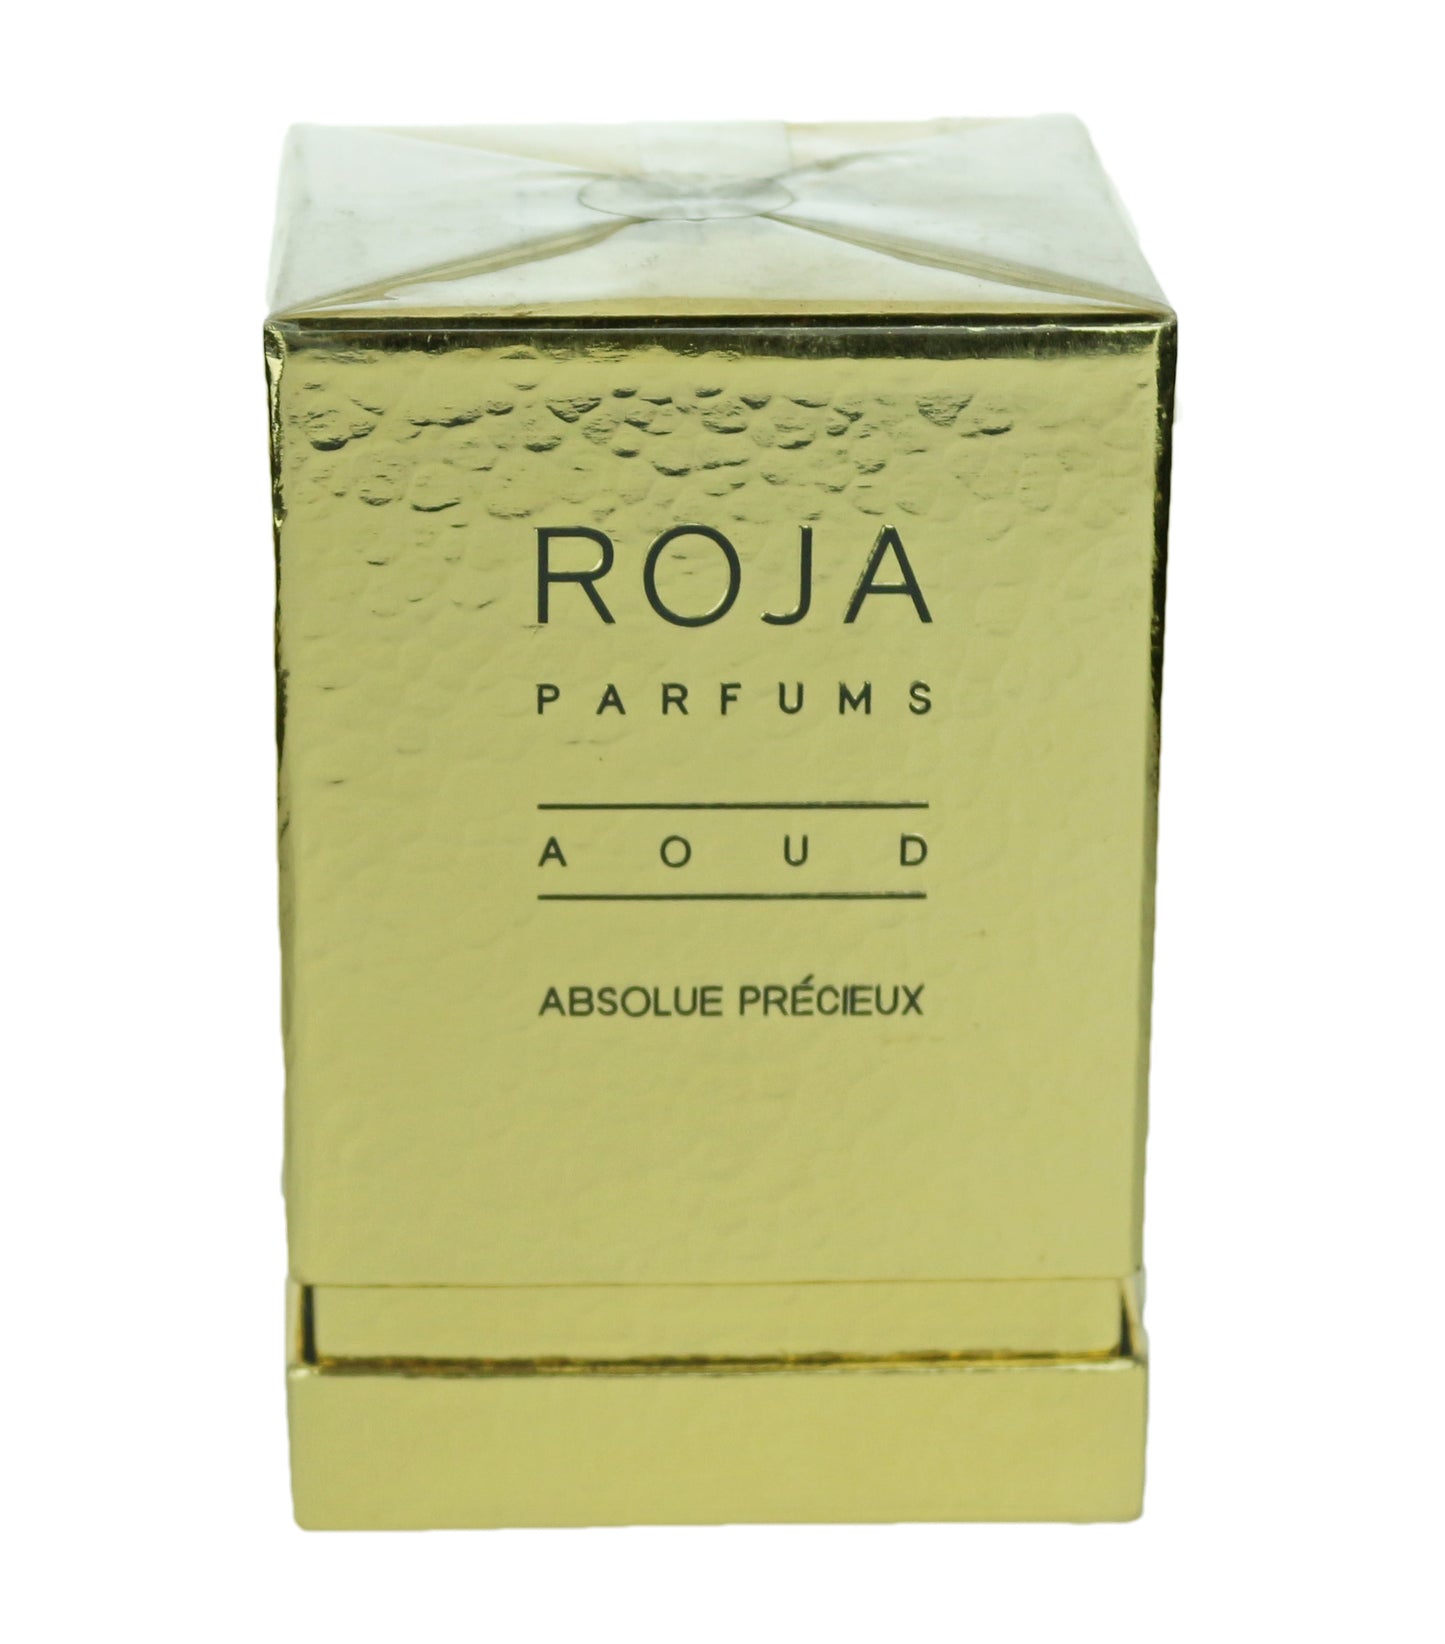 Roja Dove 'Aoud Absolue Precieux' Parfum 1oz/30ml New In Box